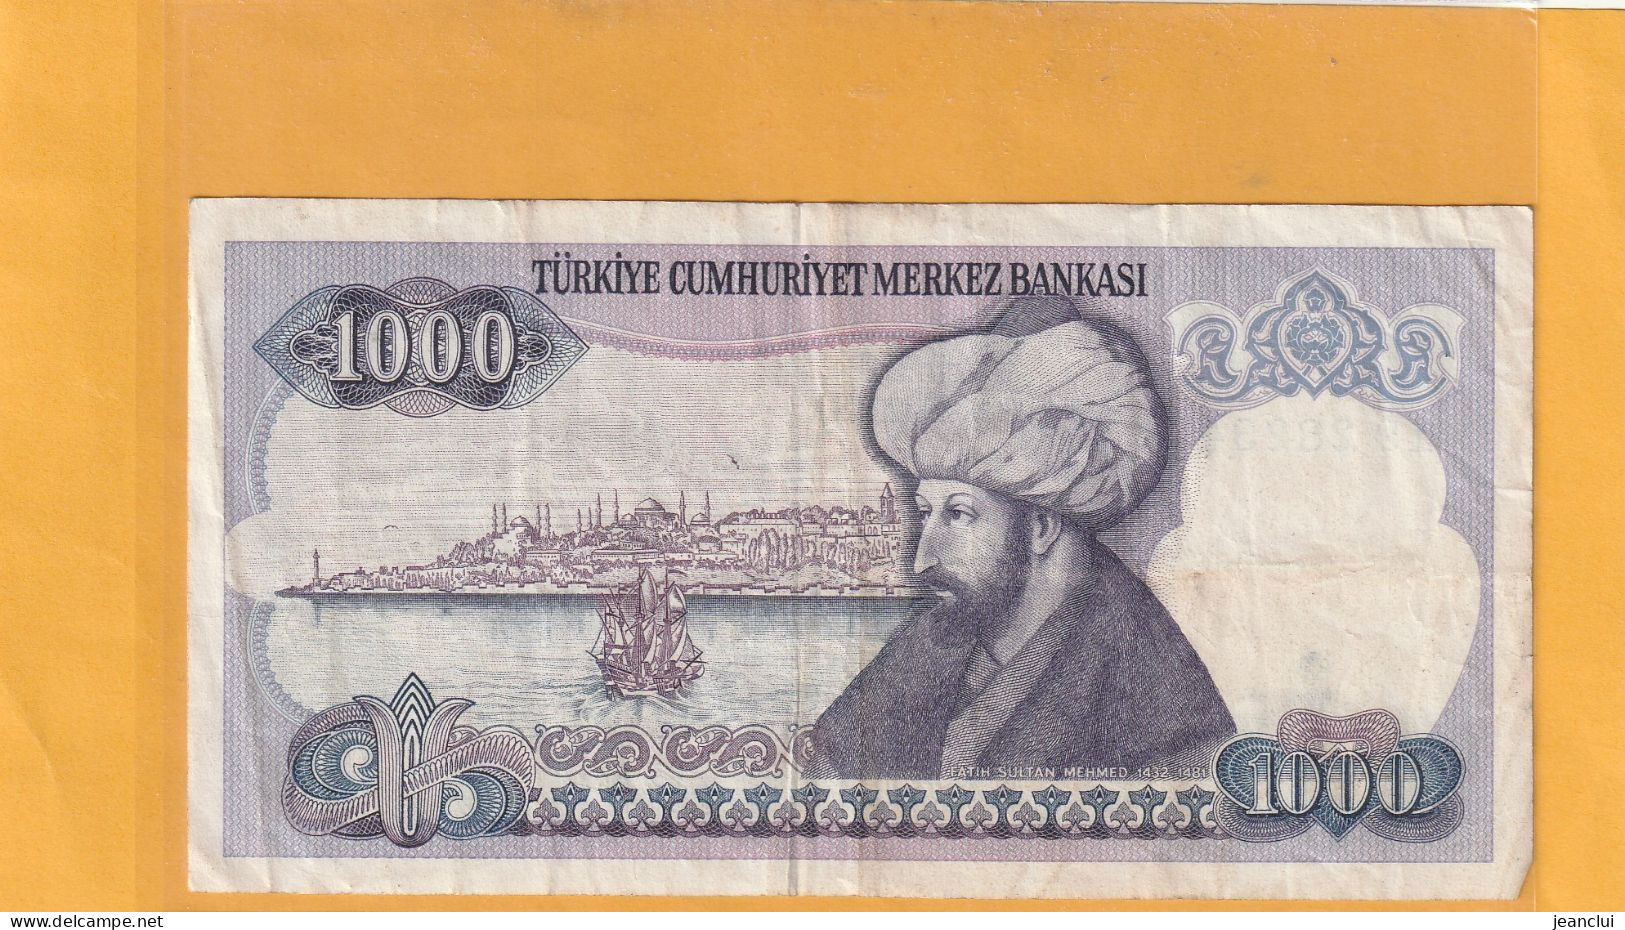 TURKIYE CUMHURIYET MERKEZ BANKASI . 1.000 LIRA . 14 OCAK 1970  . N°  A19 282347 .  2 SCANNES  .  BILLET USITE - Turchia